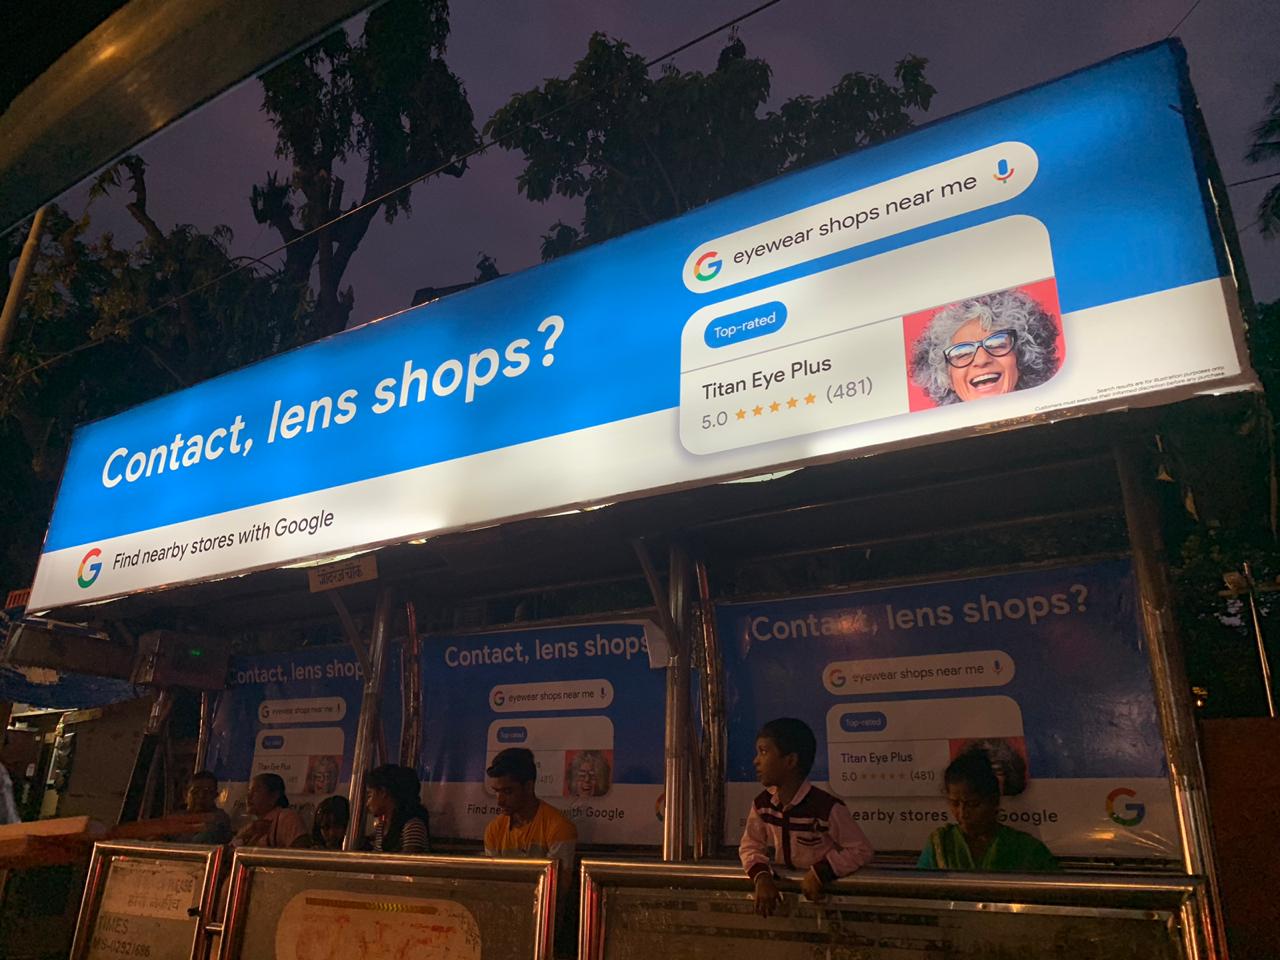 Google-Titan Eye Plus Bus Stop Ad